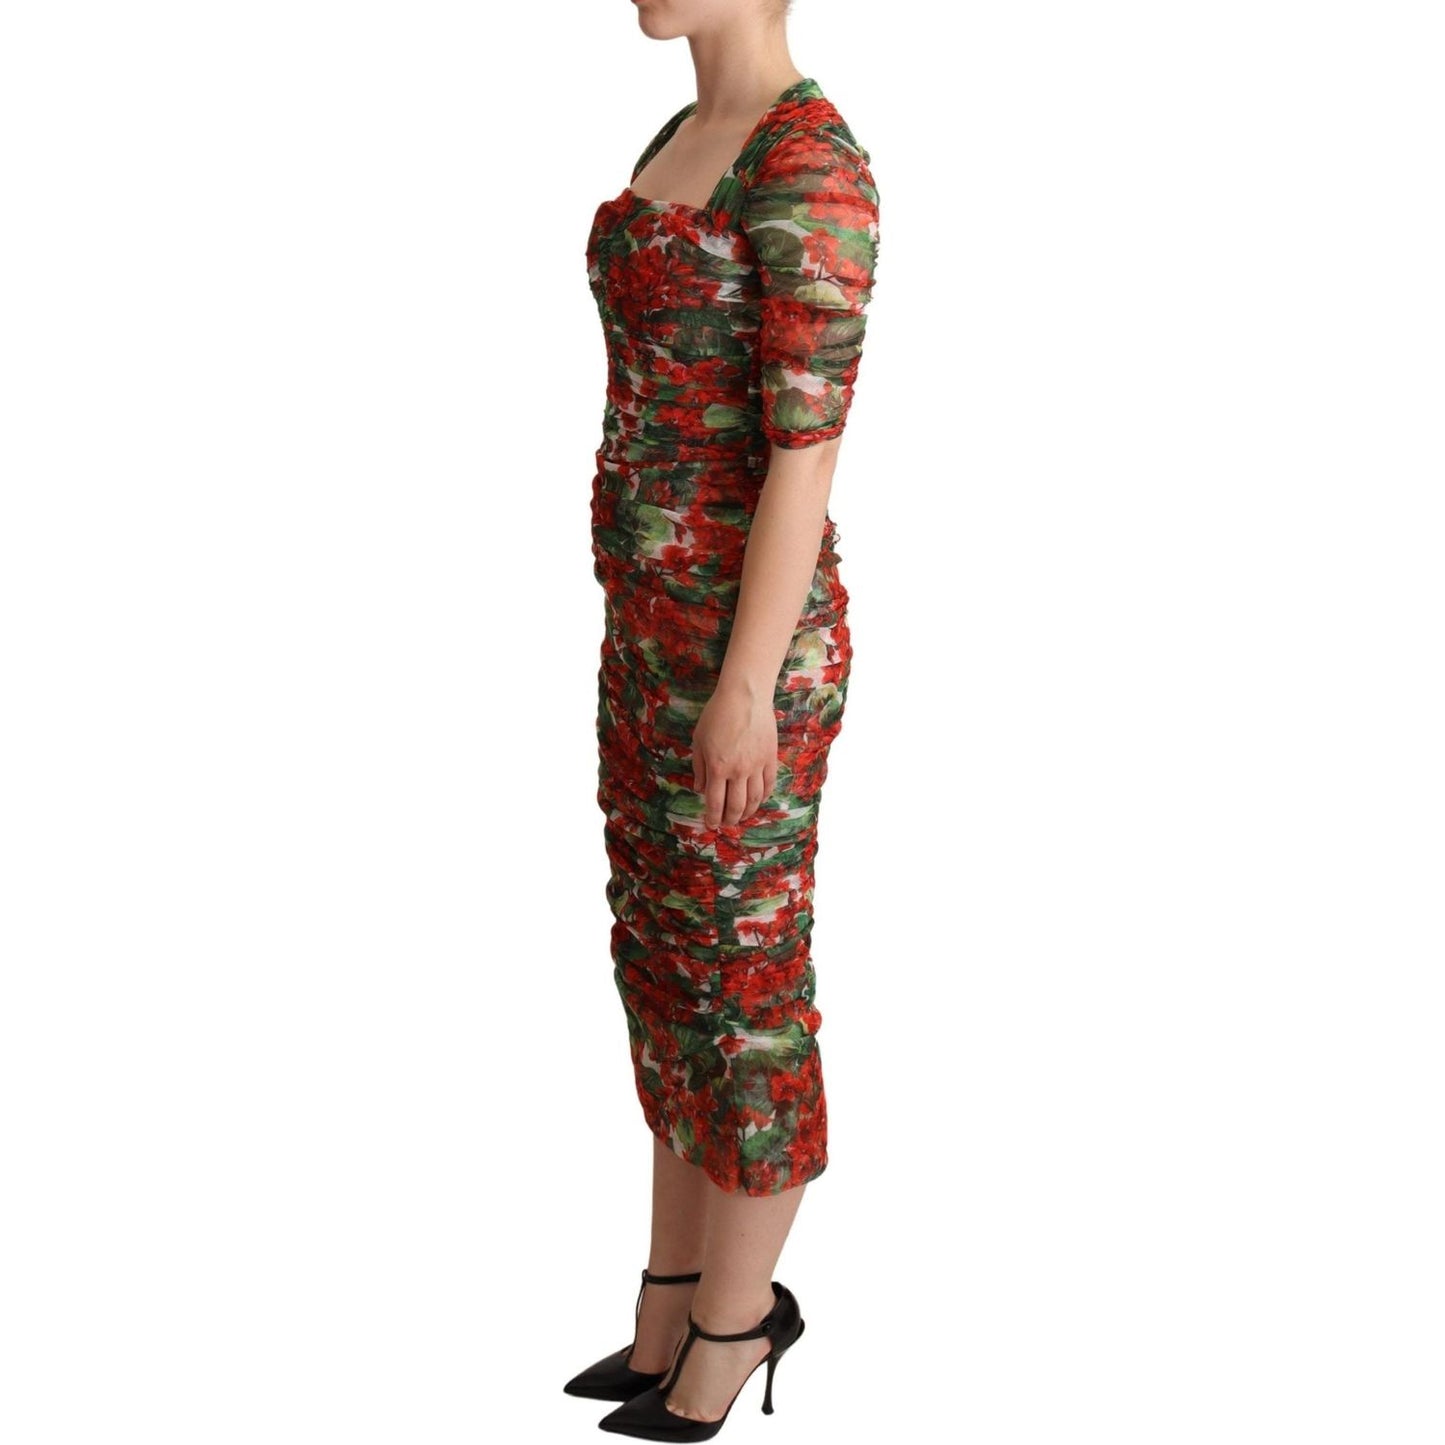 Dolce & Gabbana Elegant Red Floral Midi Sheath Dress WOMAN DRESSES red-floral-print-tulle-sheath-midi-dress IMG_0144-scaled-31c39222-f47.jpg